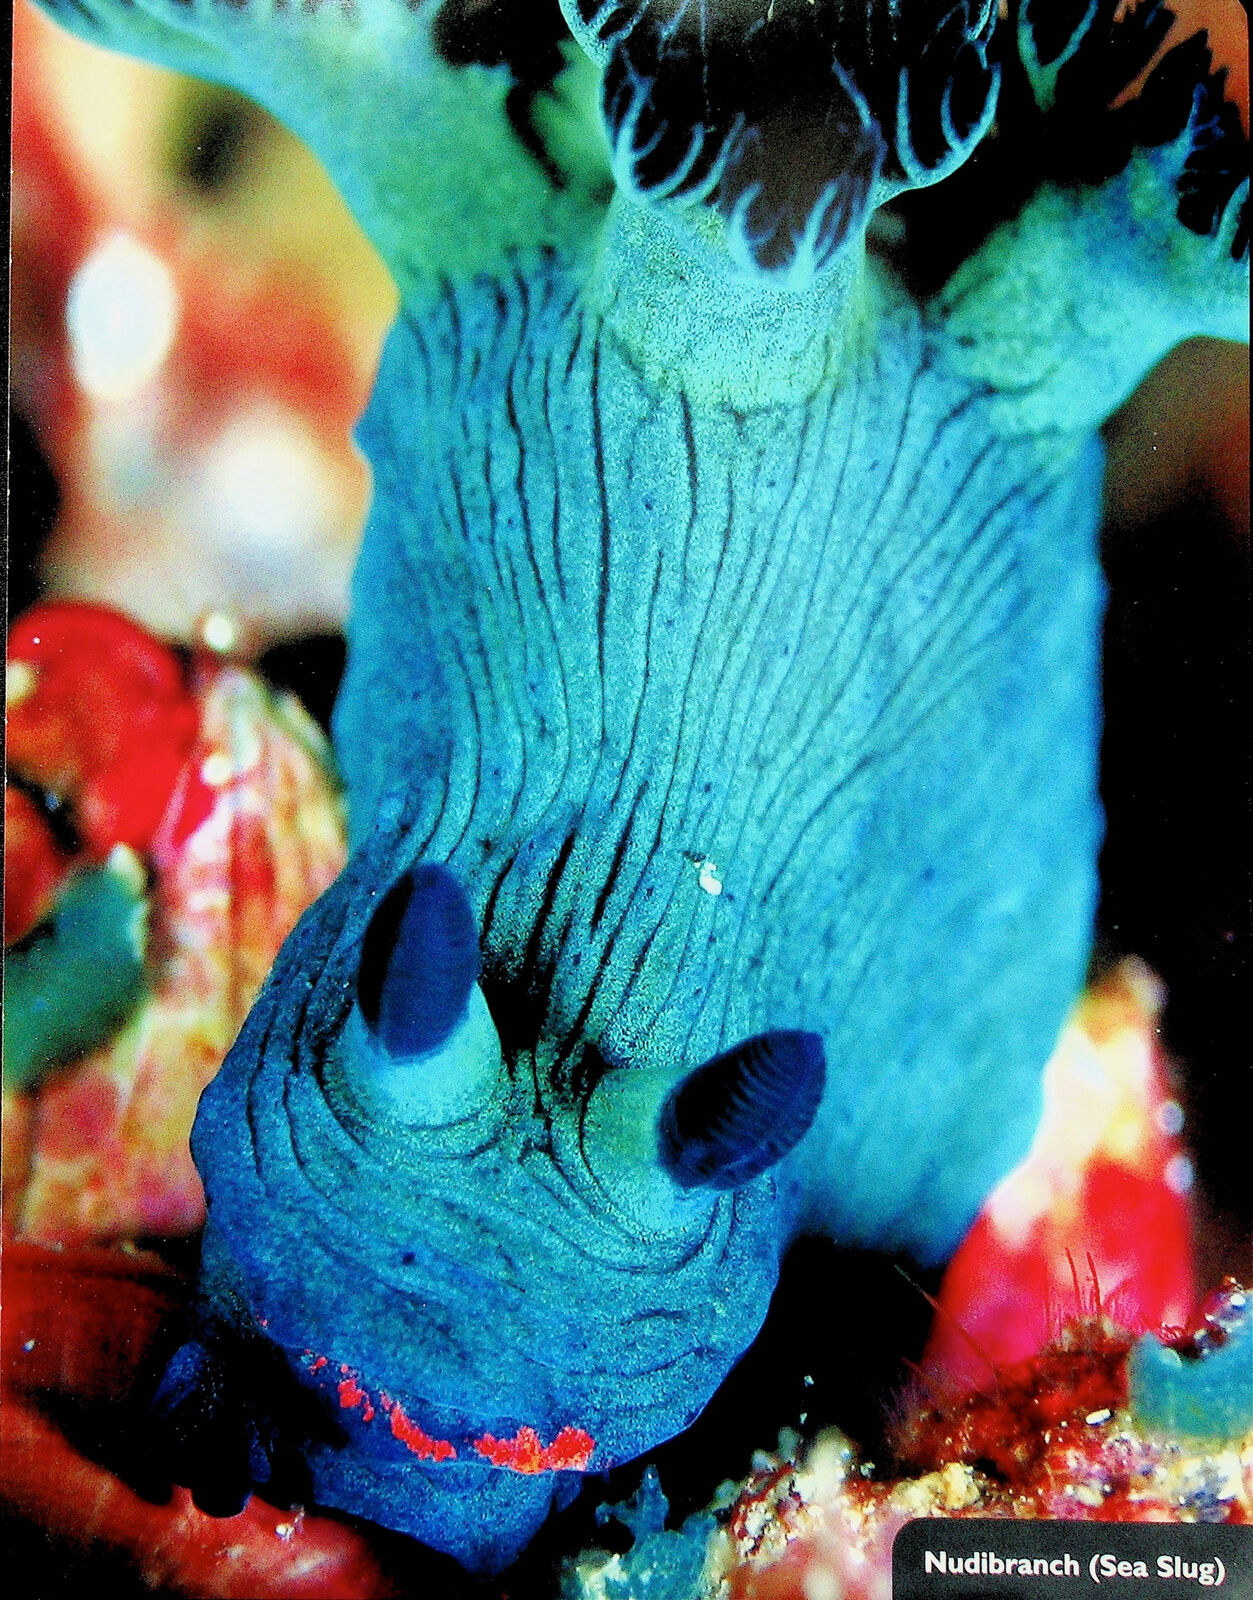 Nudibranch (Sea Slug) - Ocean / Sea Animal Poster Print 9.5